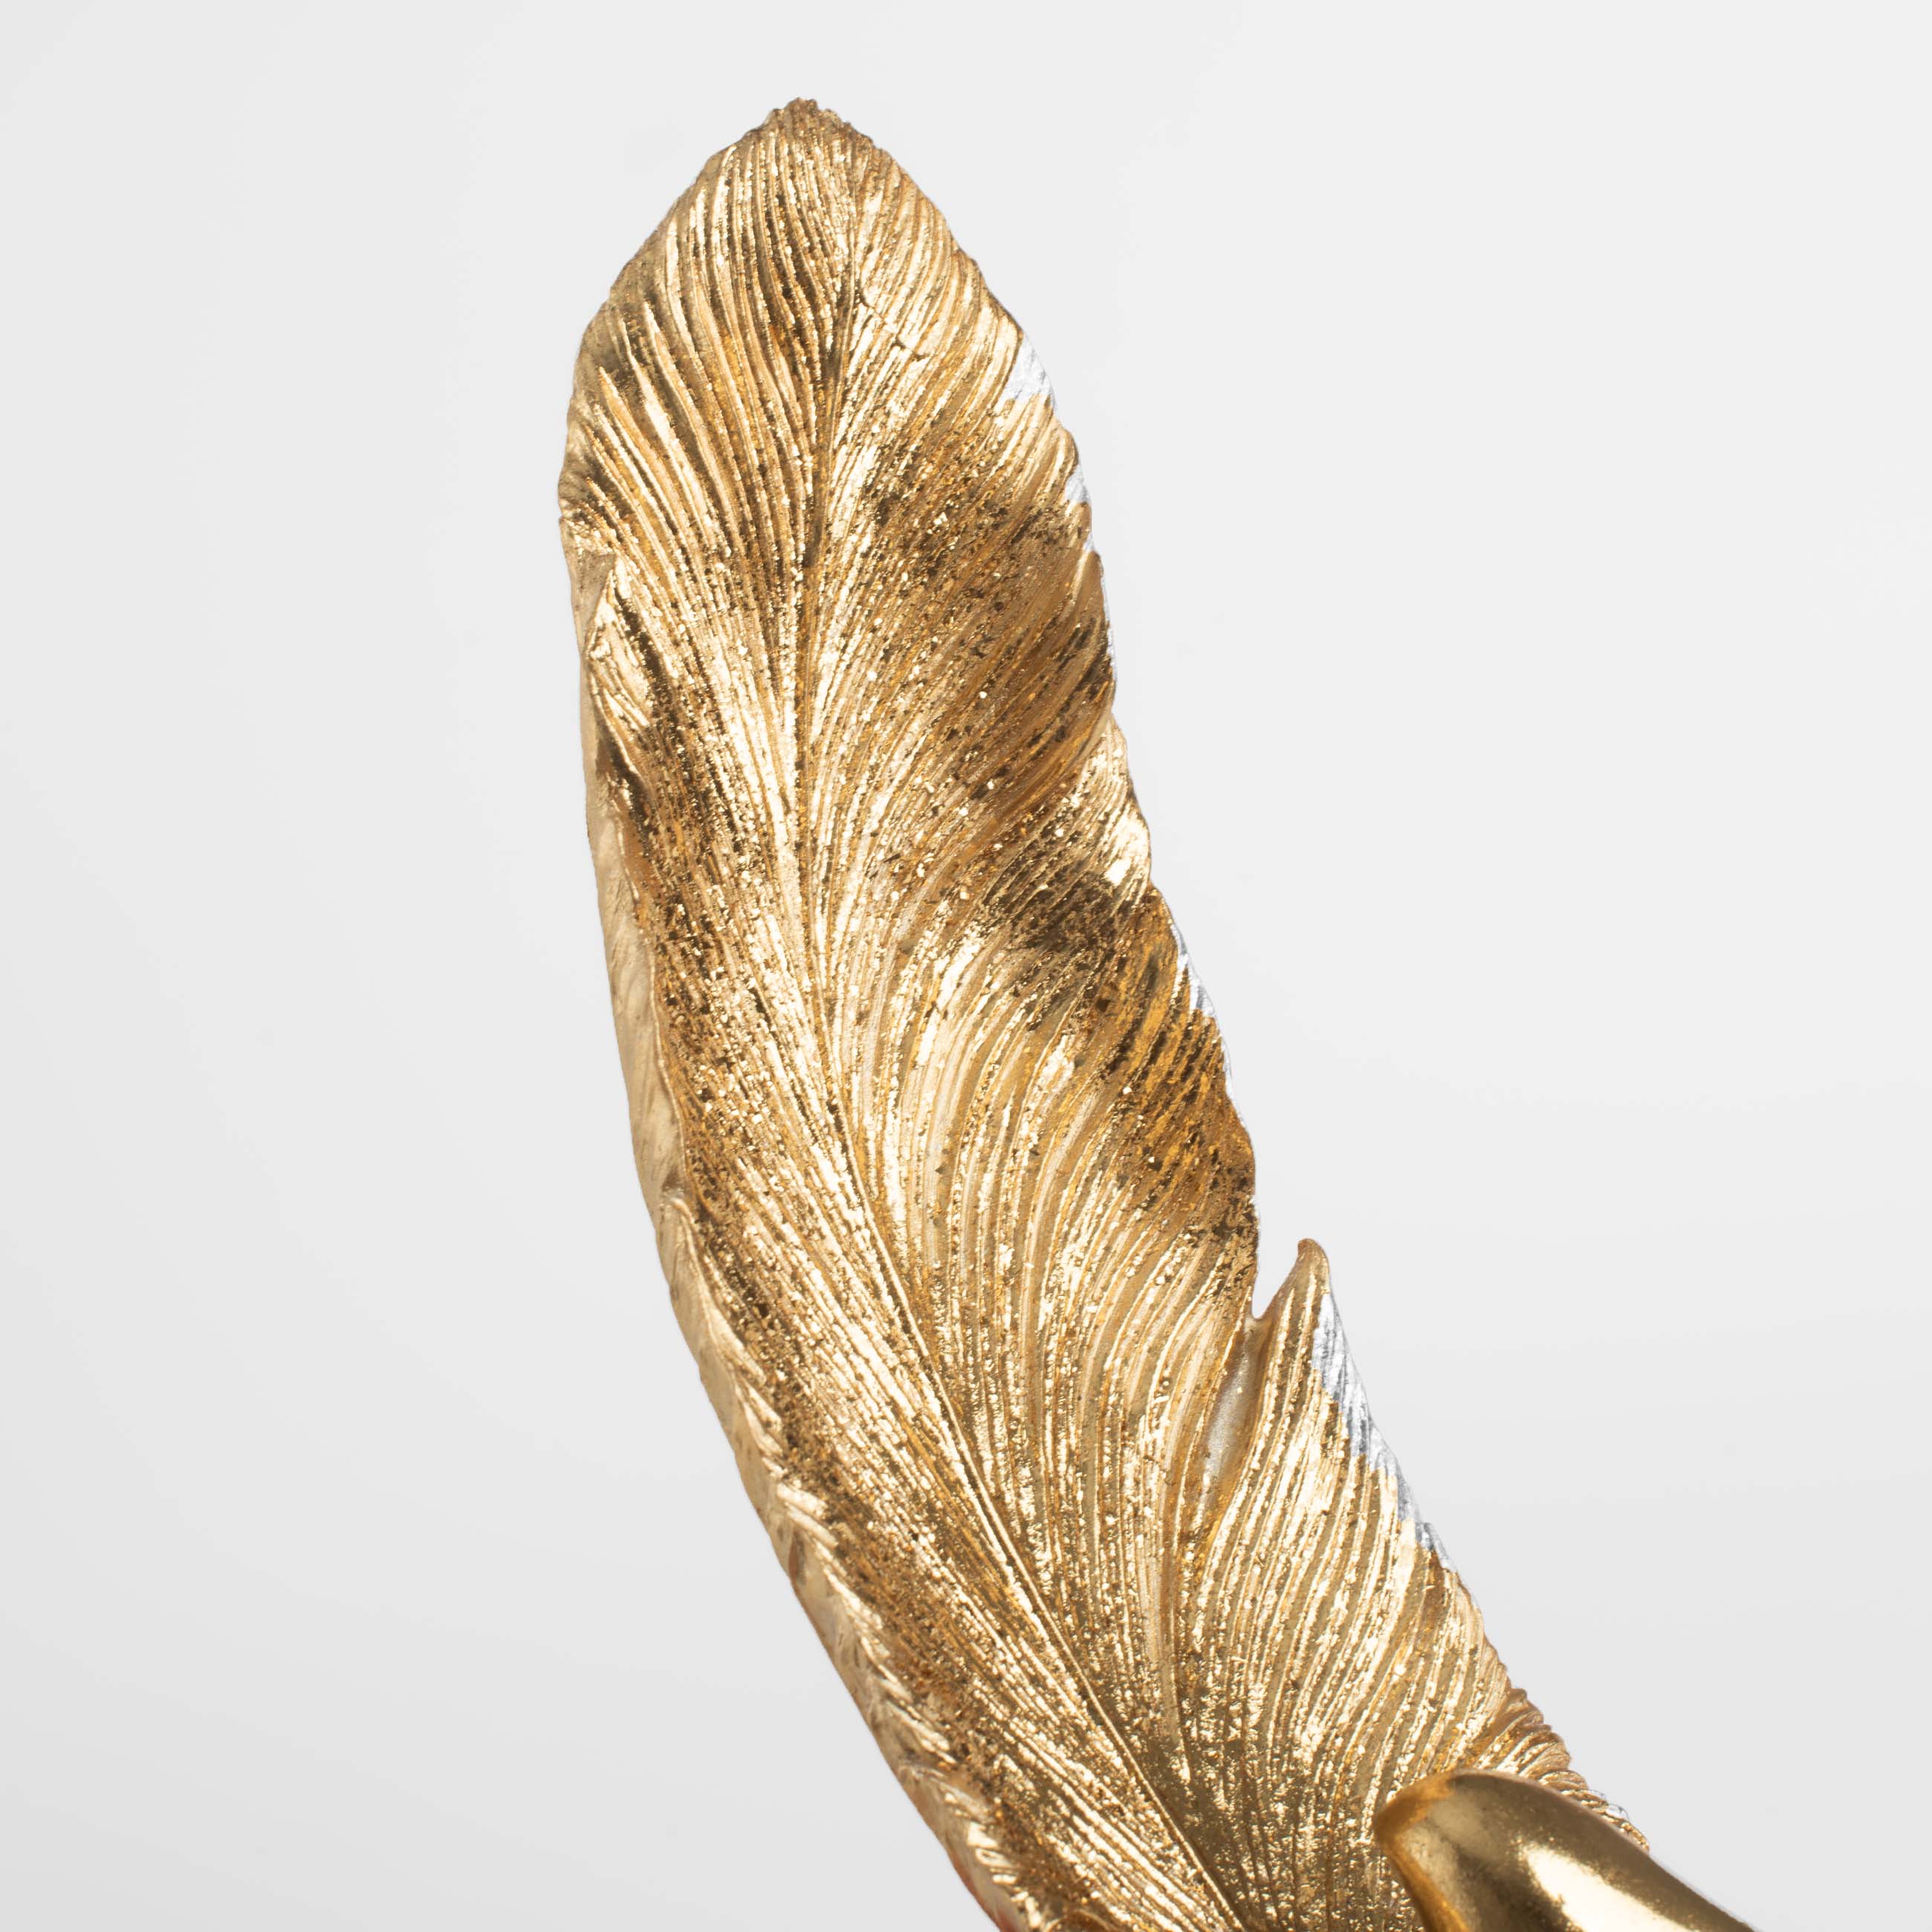 Decorative dish, 23x8 cm, polyresin, golden, Birds on a feather, Paradise garden изображение № 5